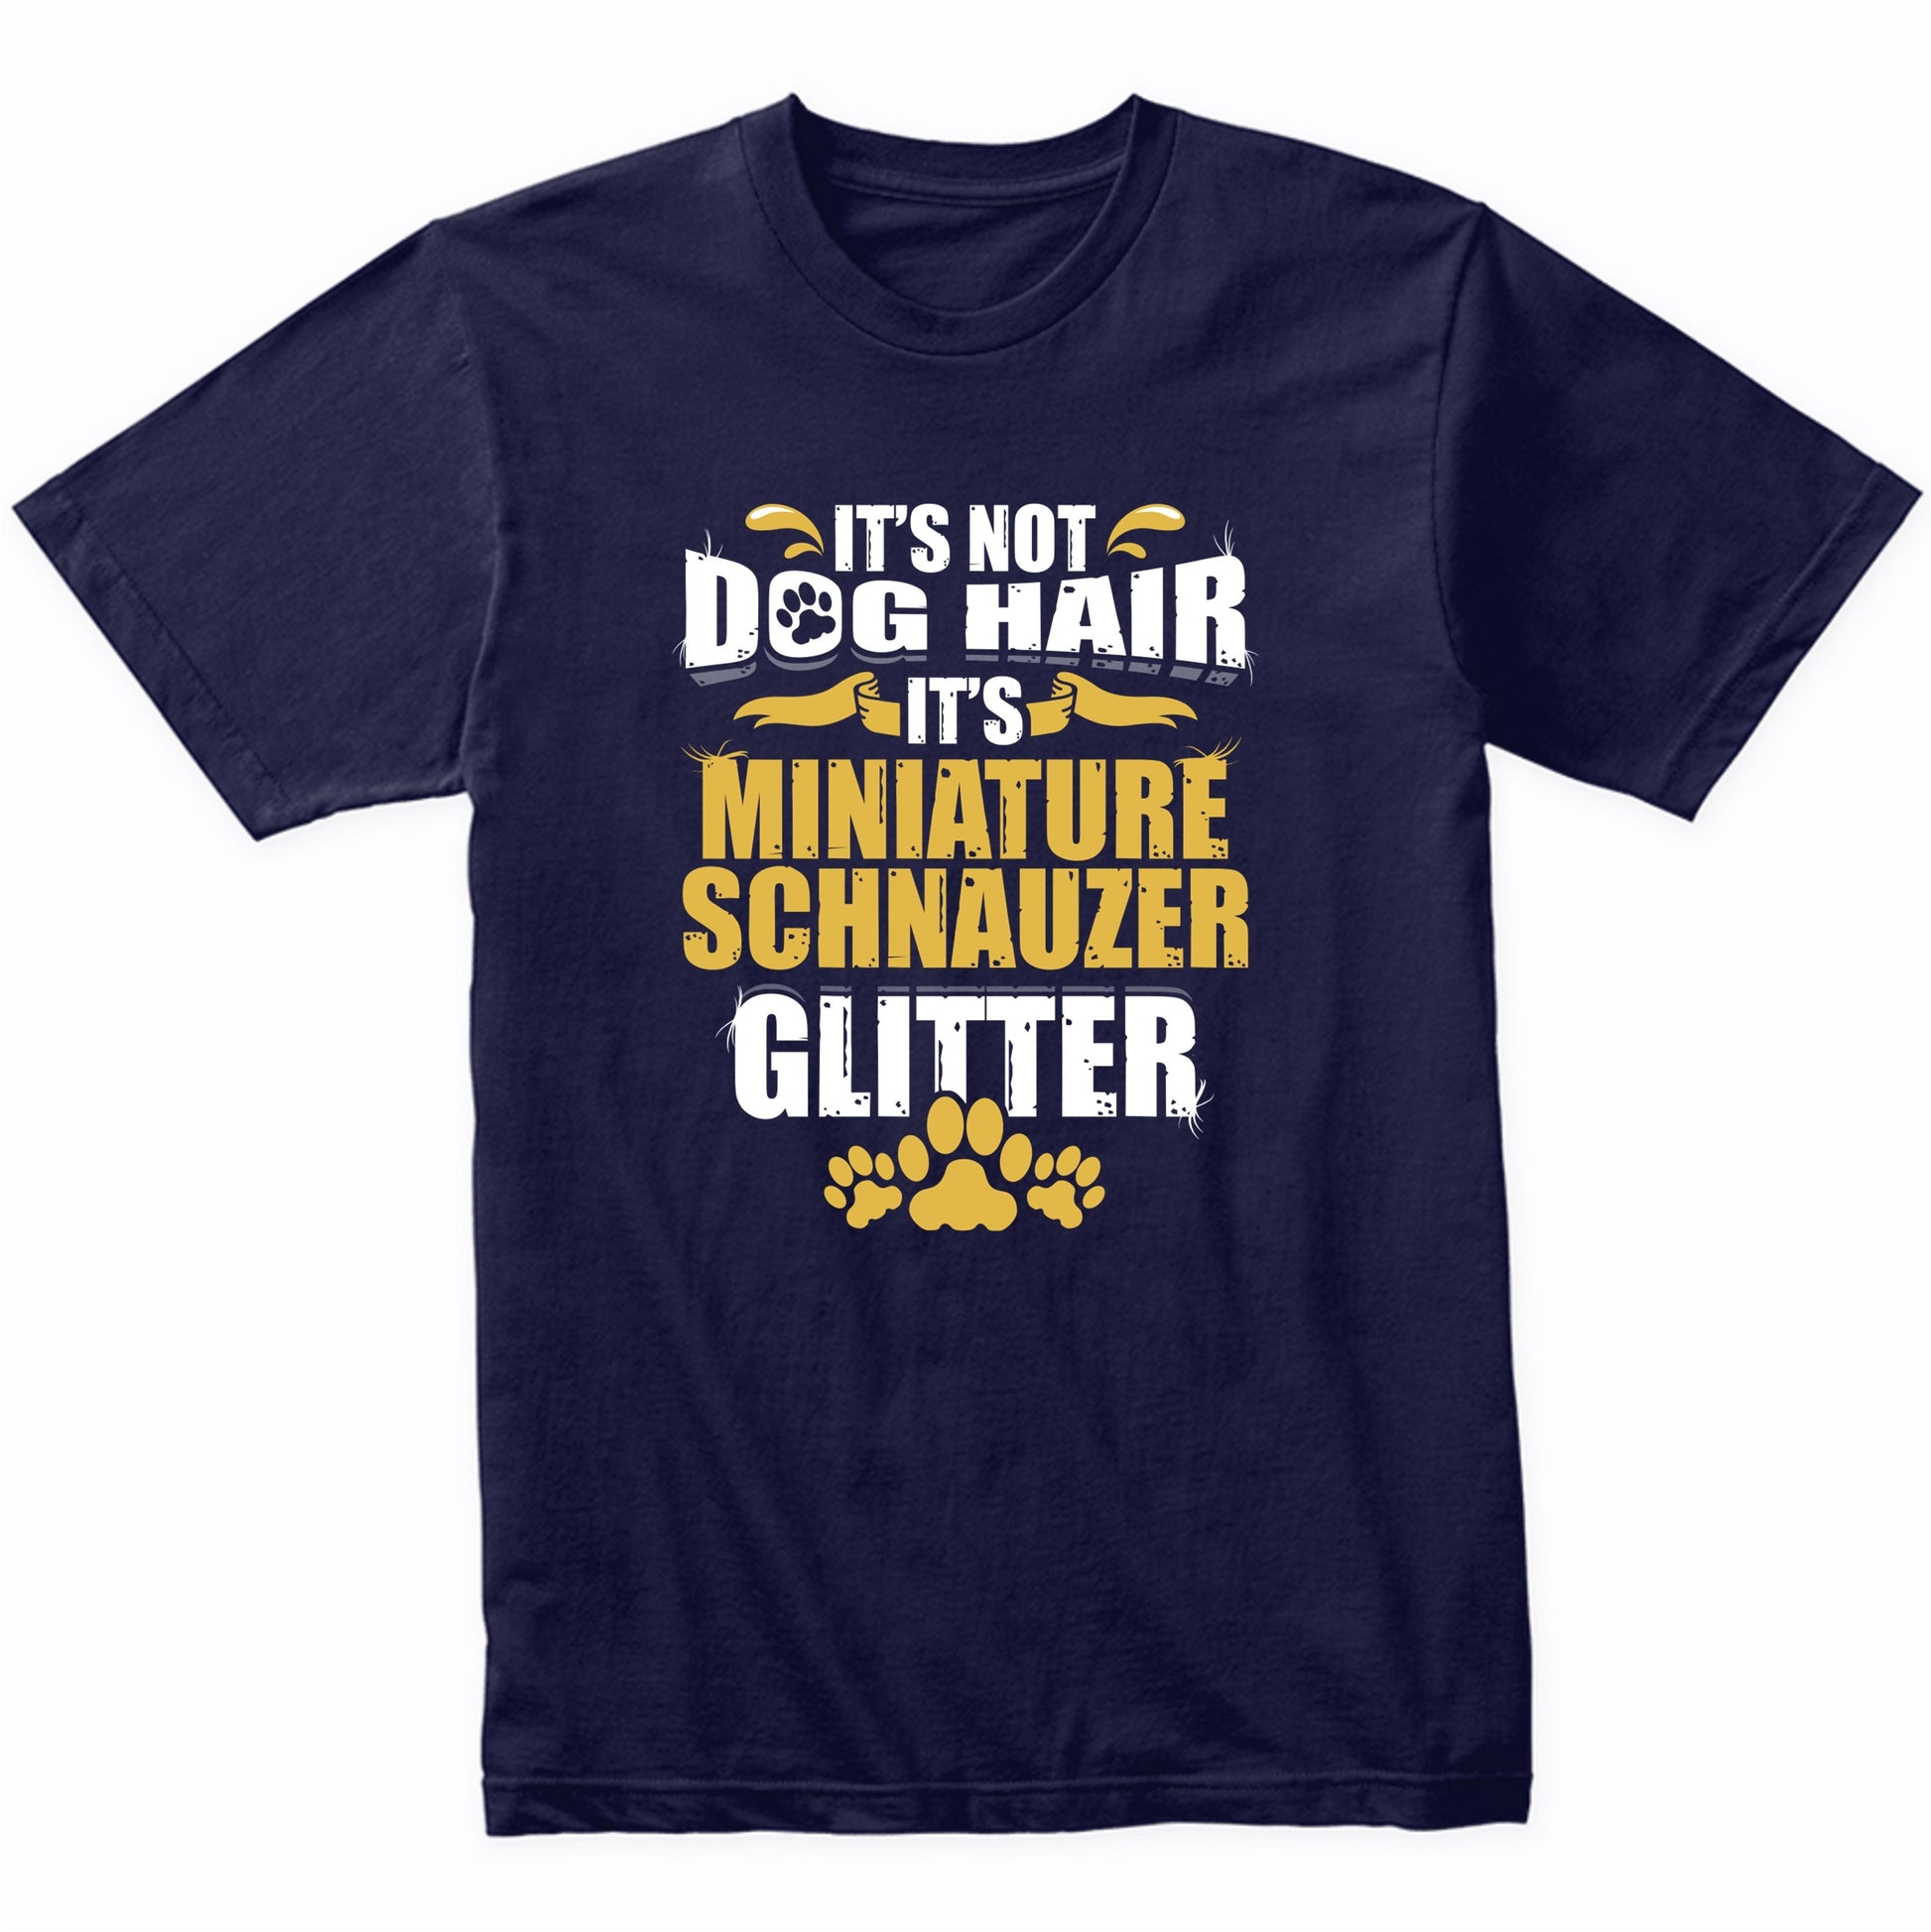 It's Not Dog Hair It's Miniature Schnauzer Glitter T-Shirt